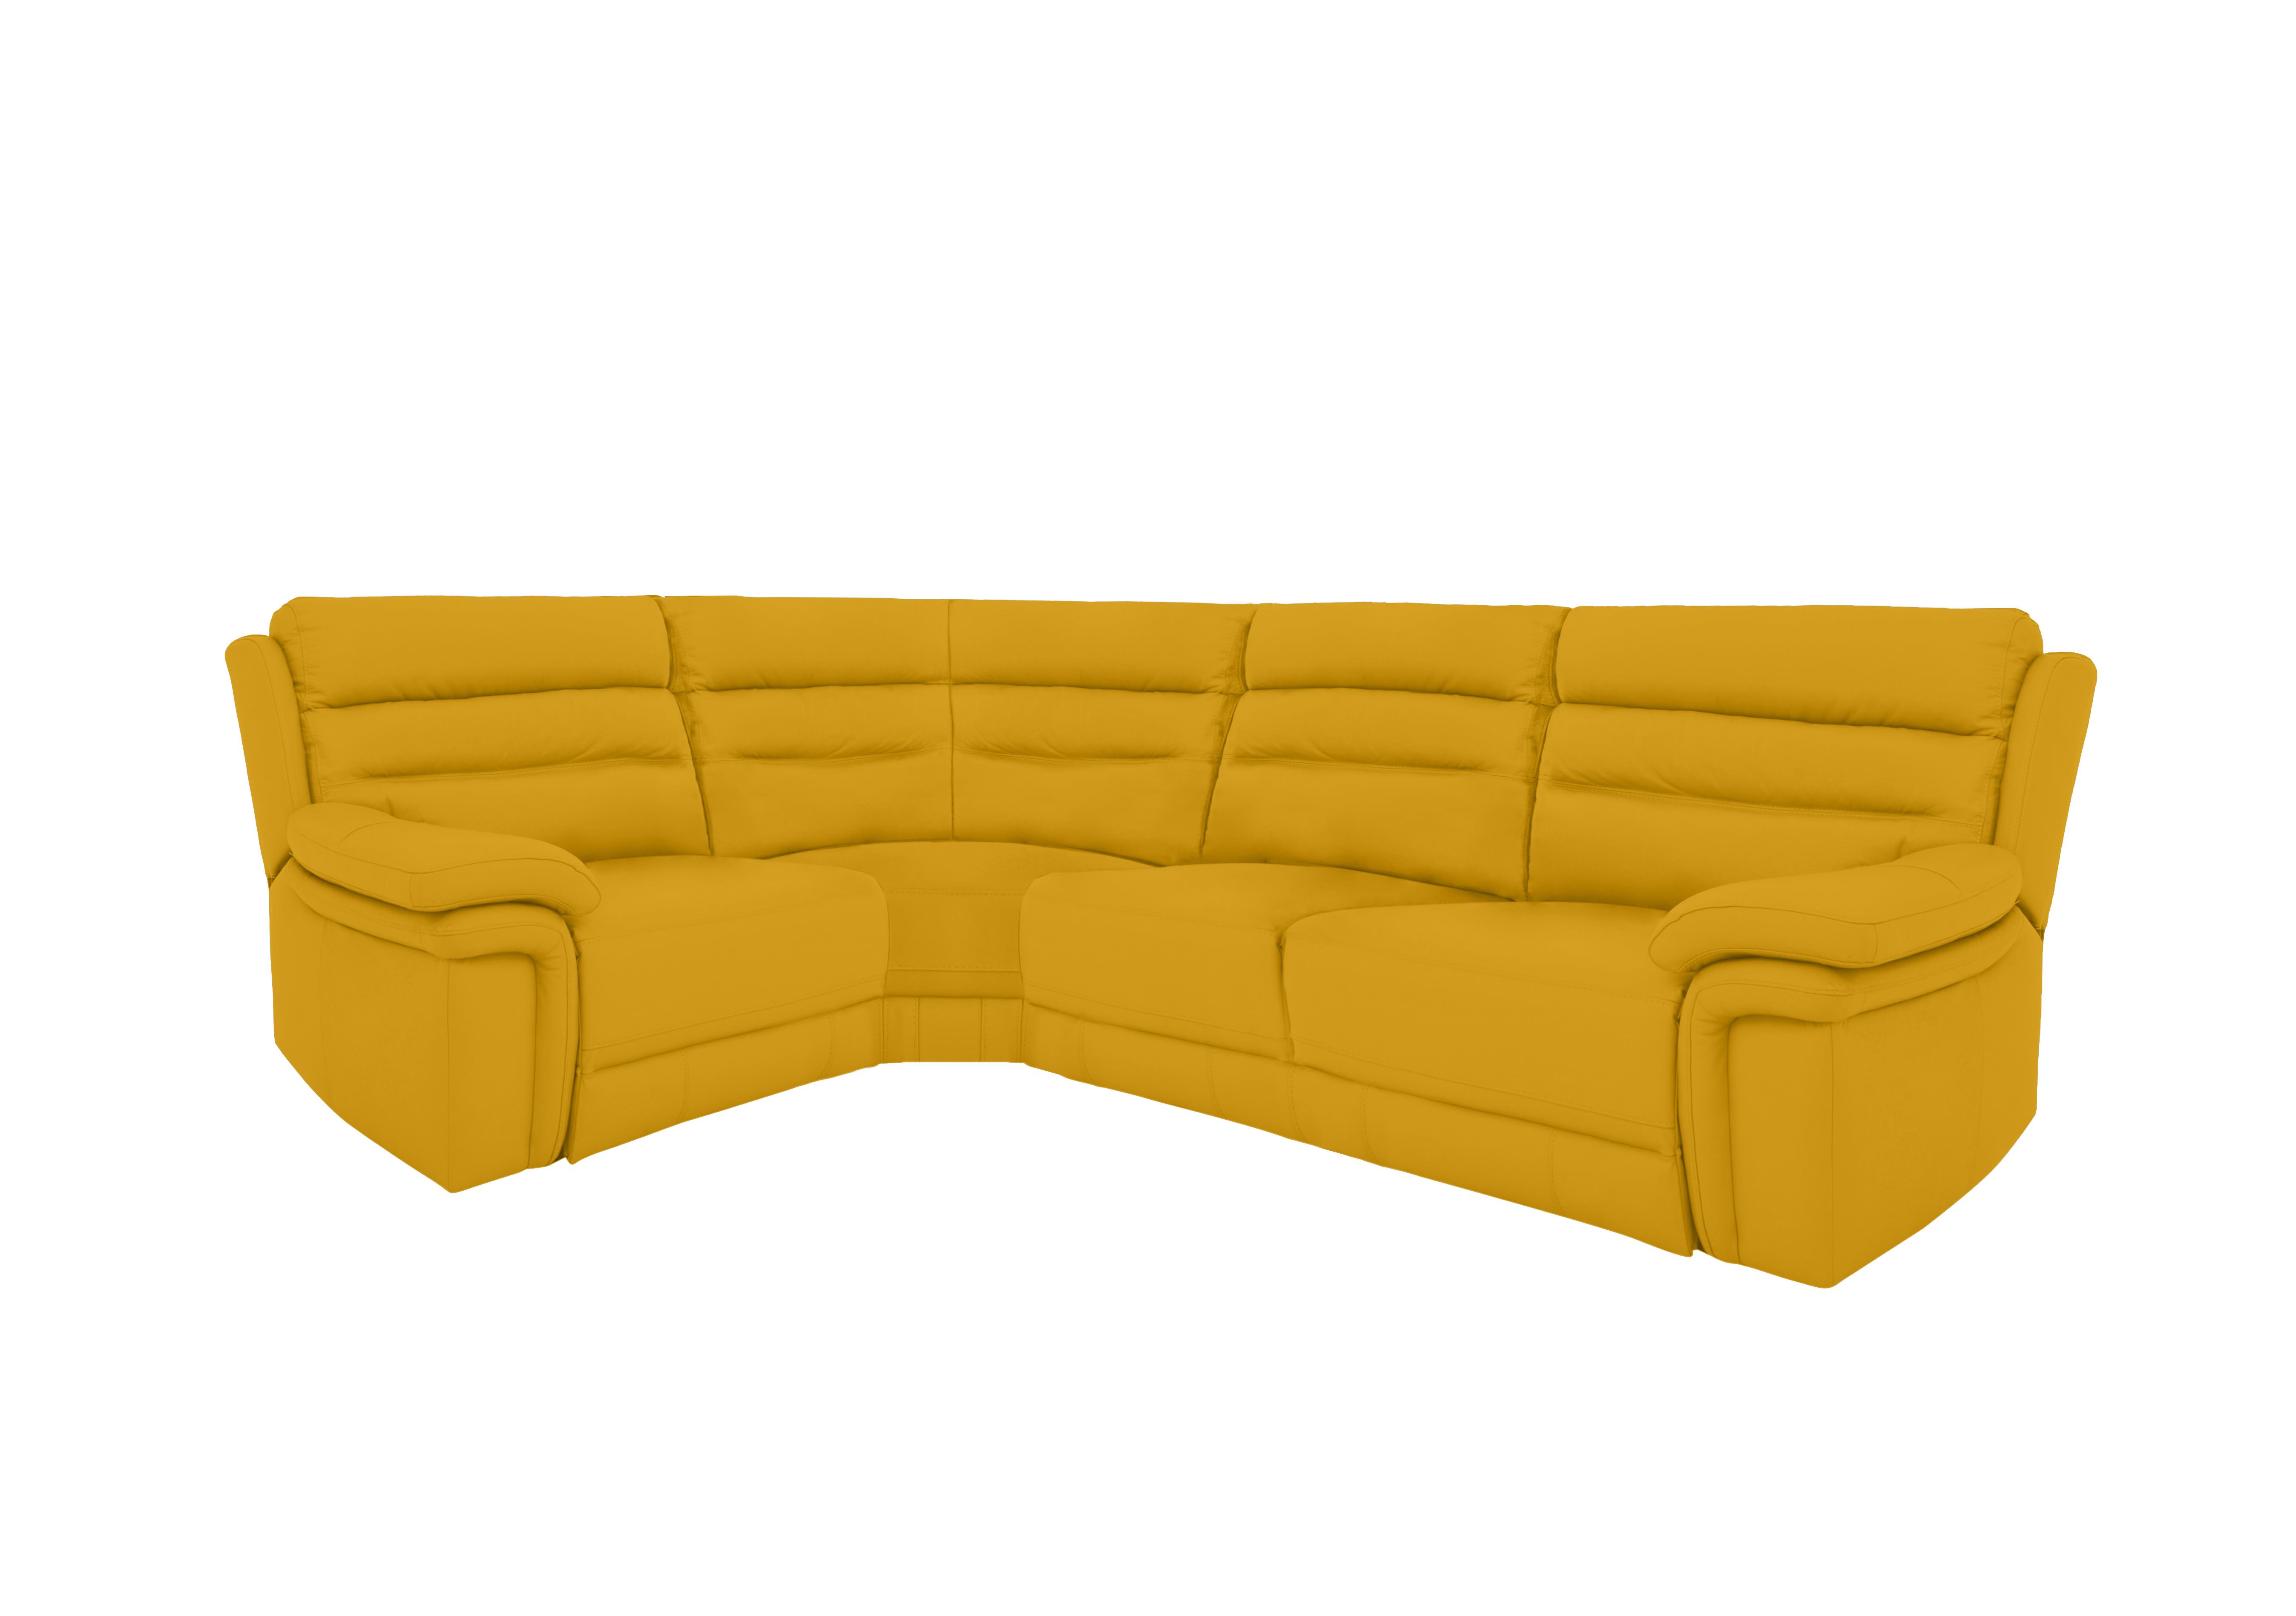 Berlin Modular Leather Corner Sofa in Giallo Le-9310 on Furniture Village